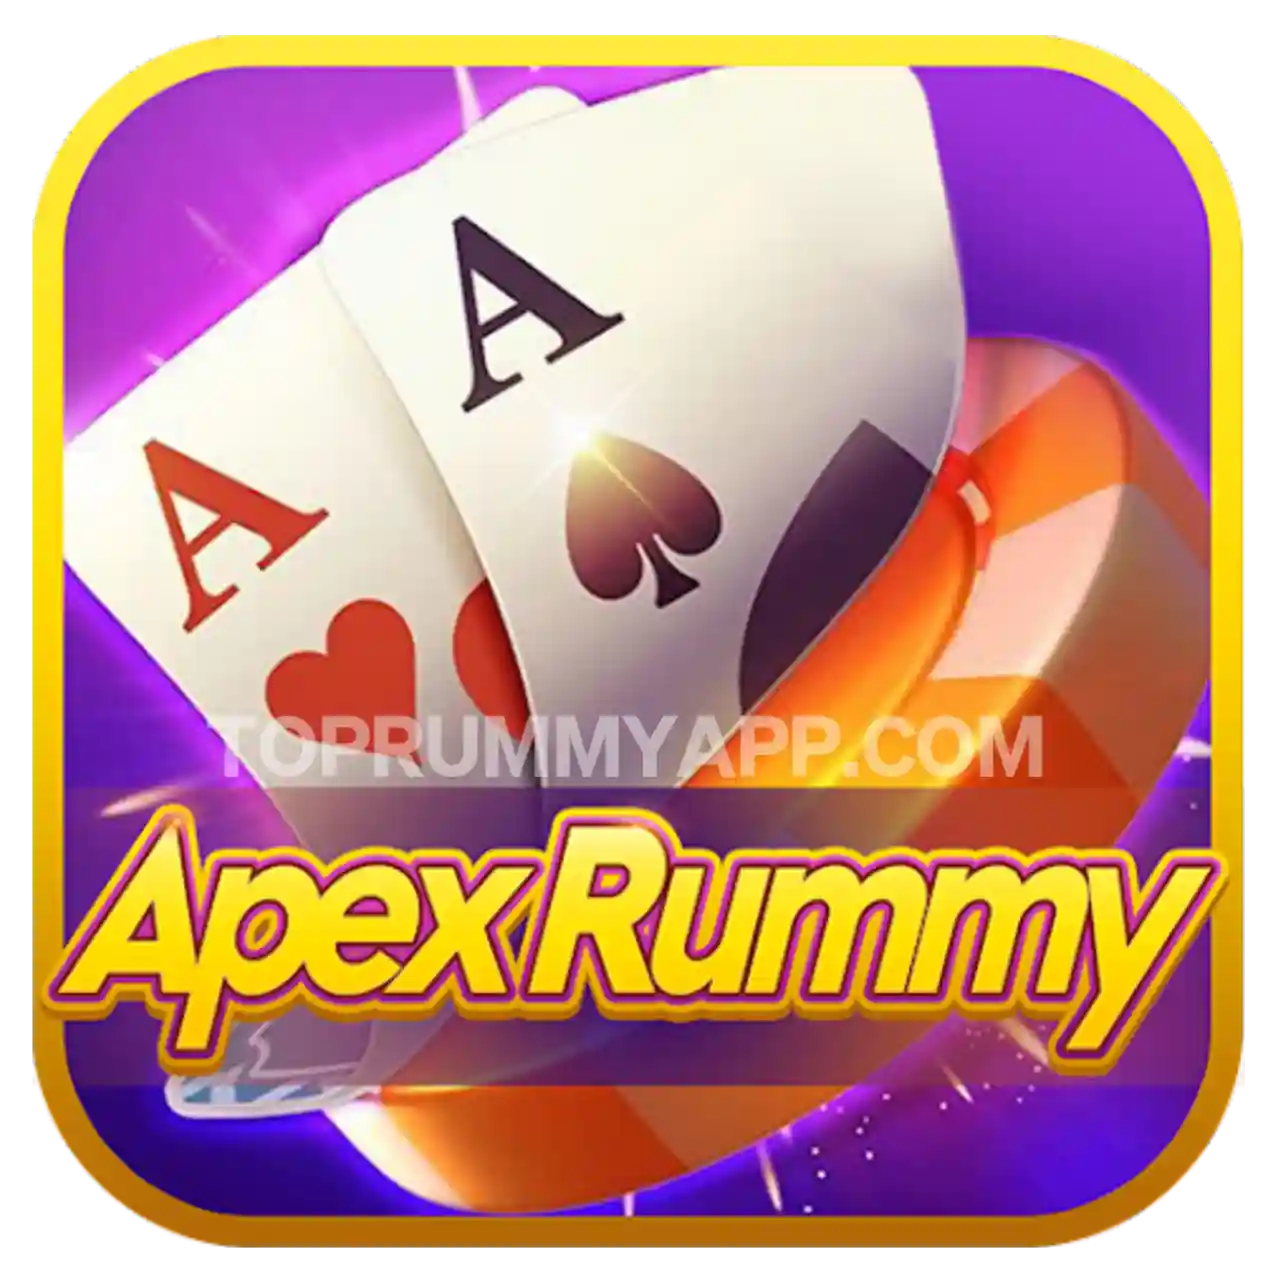 Apex Rummy App Download All Rummy App List ₹51 Bonus